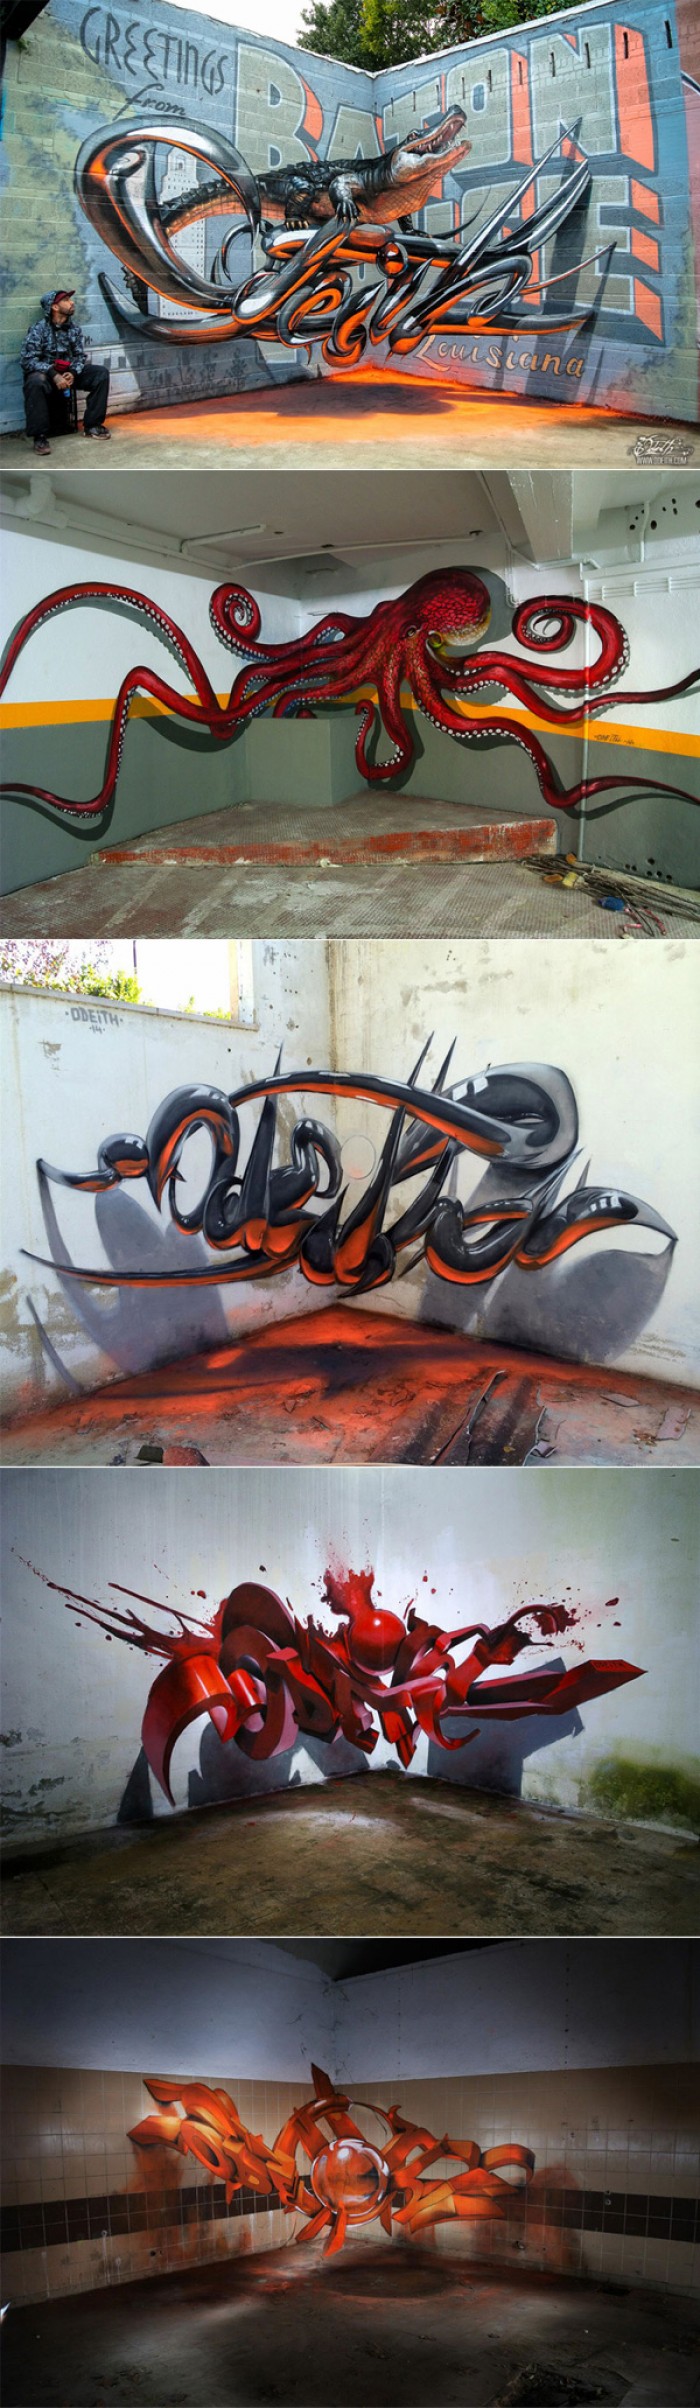 Odeith - 3D street artist creates Grafitti that floats in the air